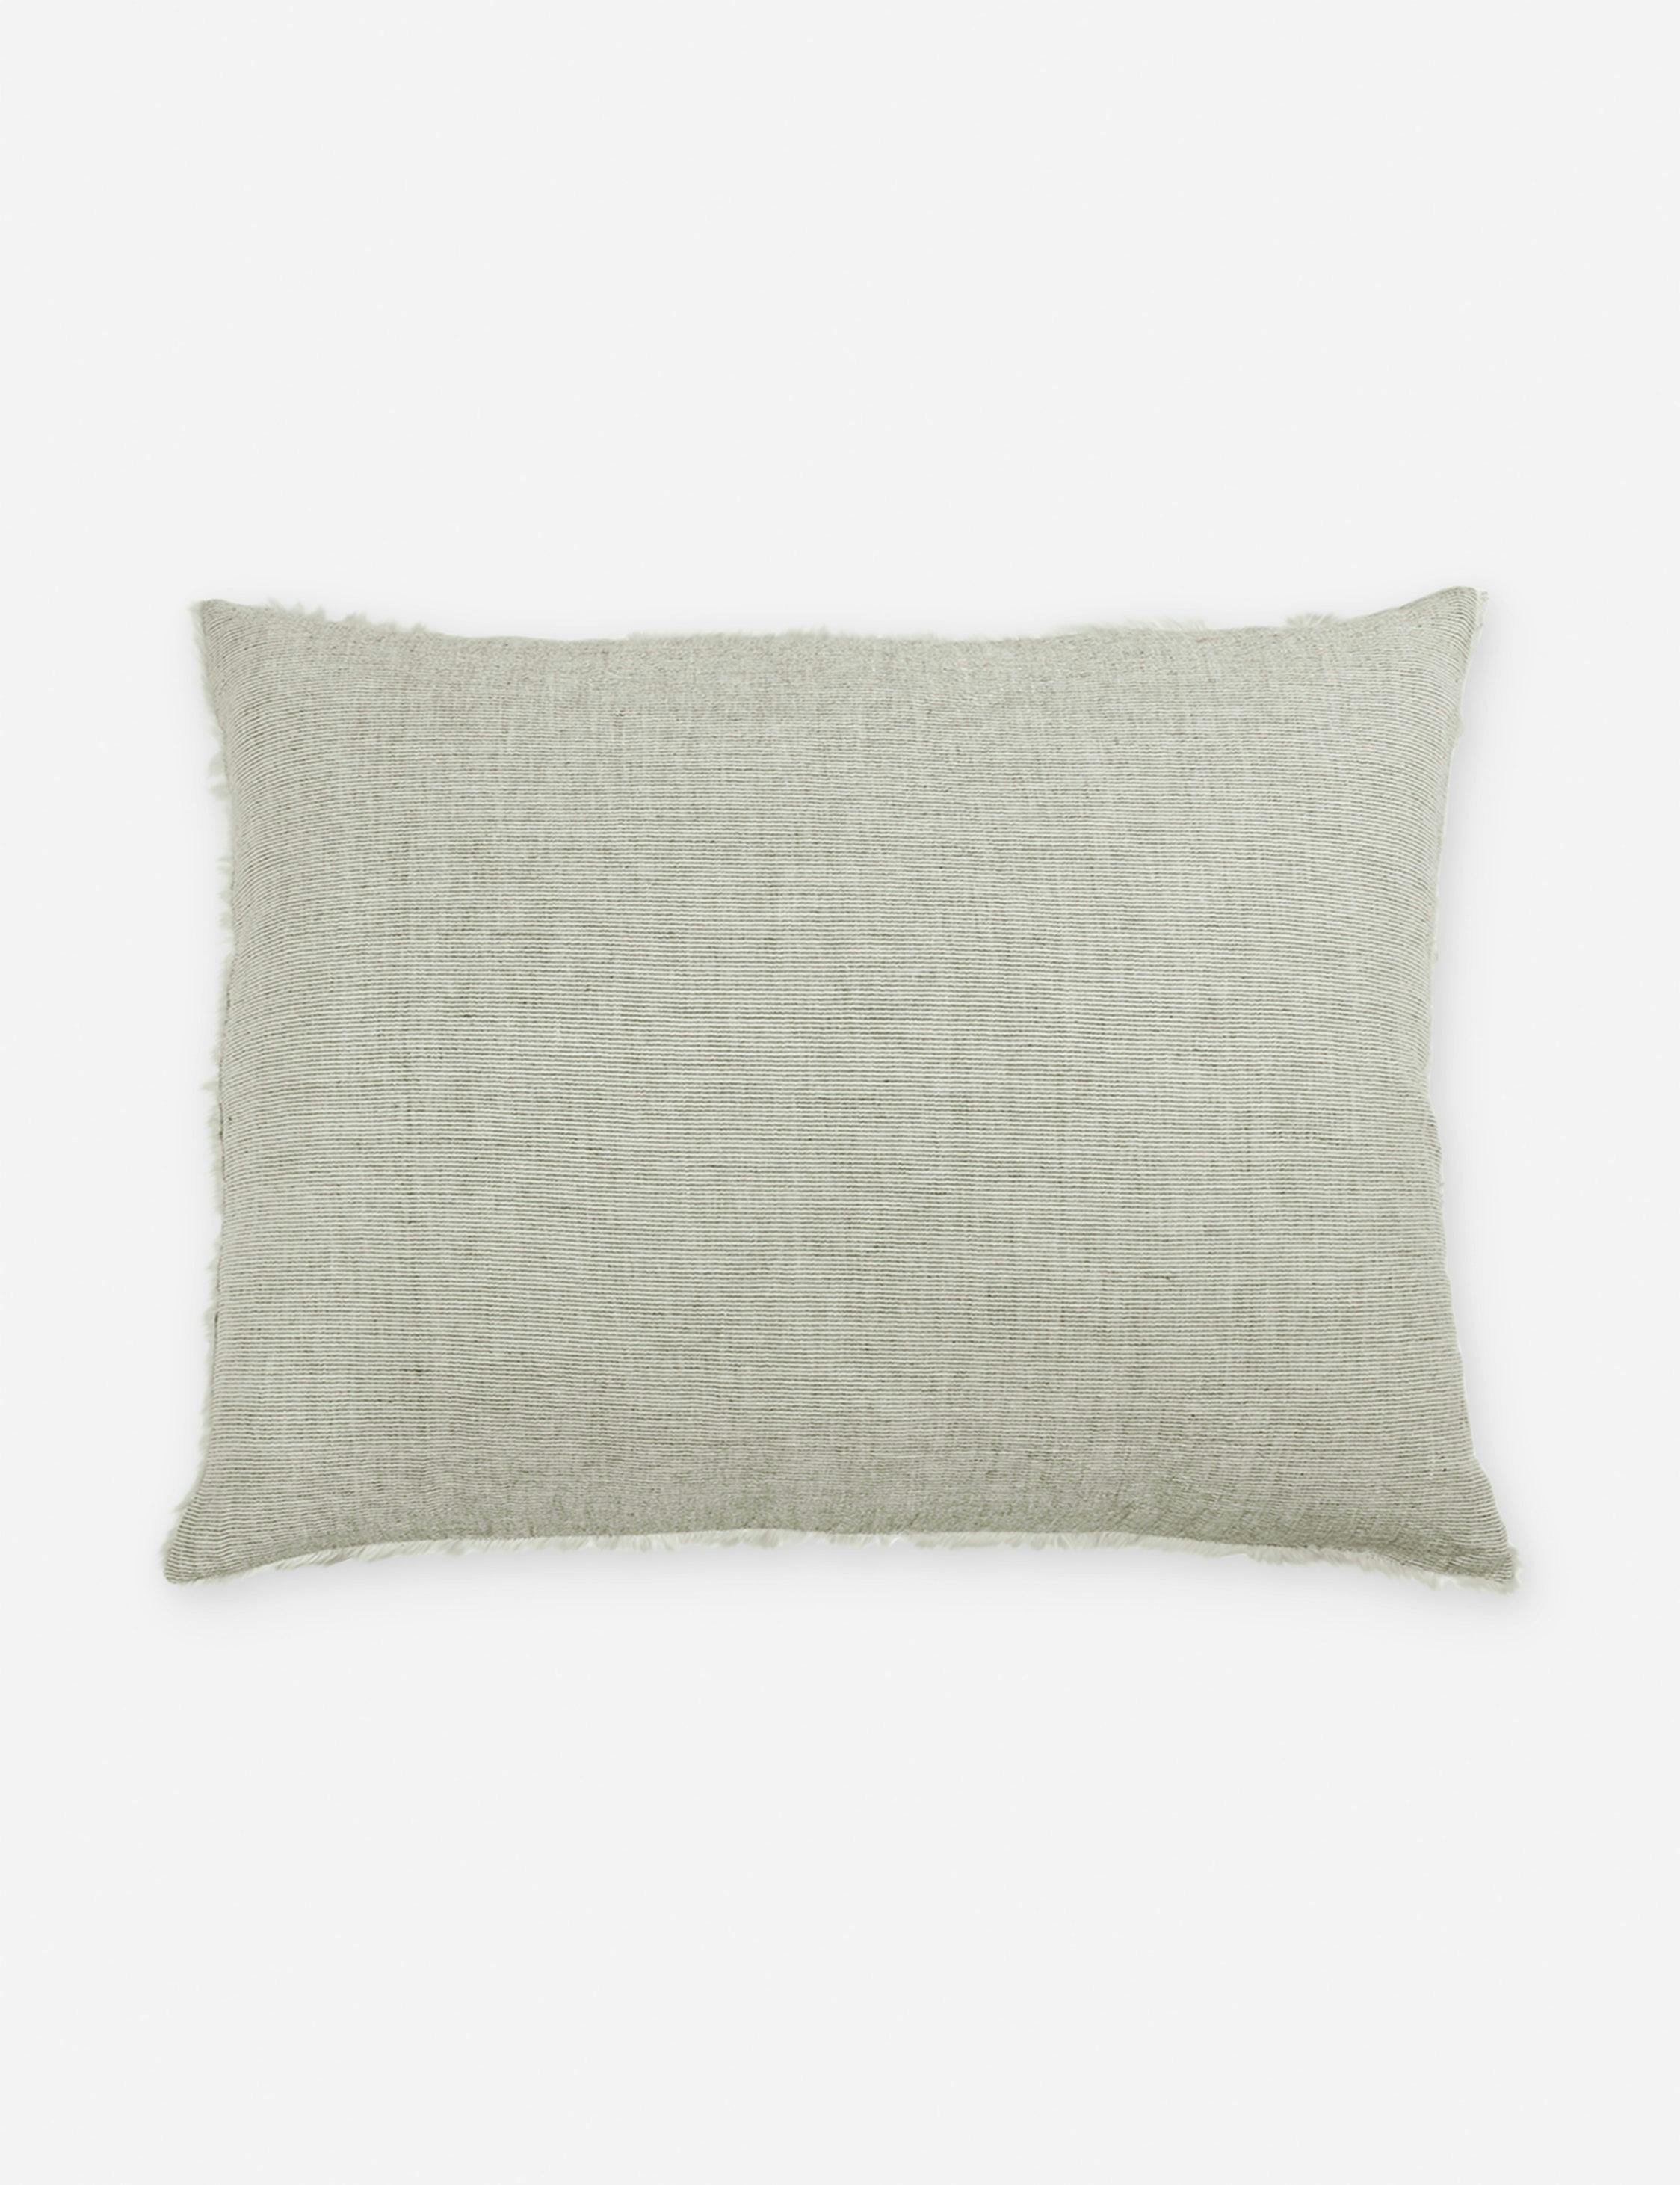 Logan King Olive 100% Linen Pillow Sham